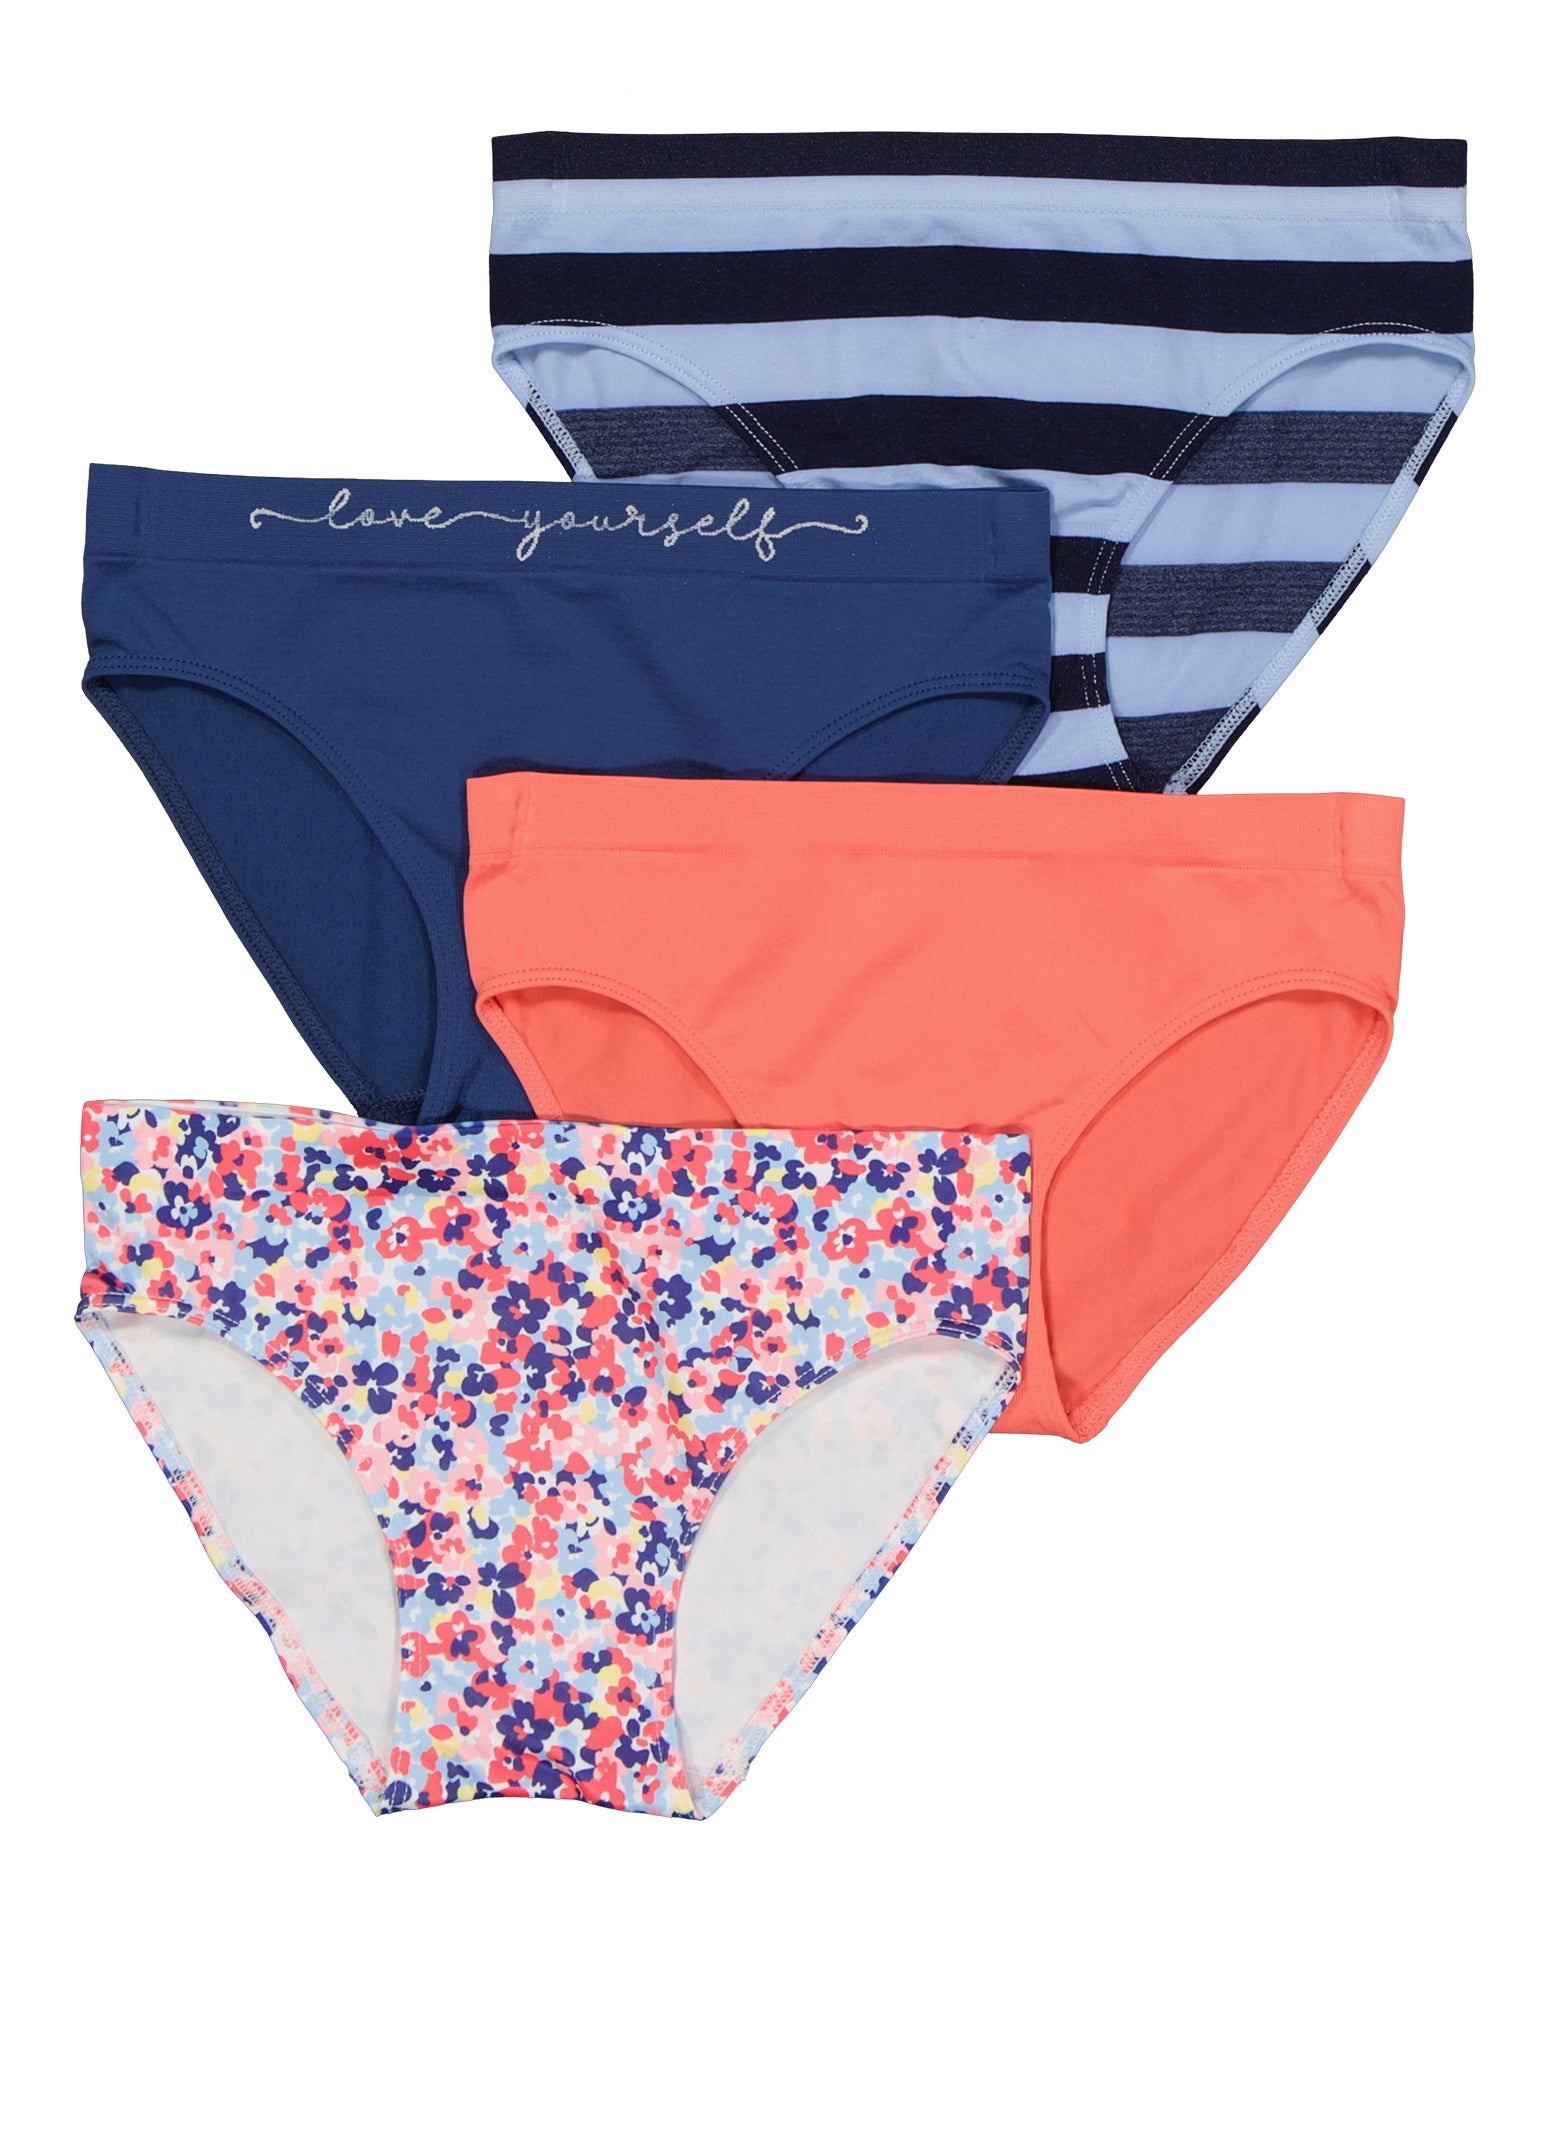 Girls 4 Pack Assorted Panties - Multi Color